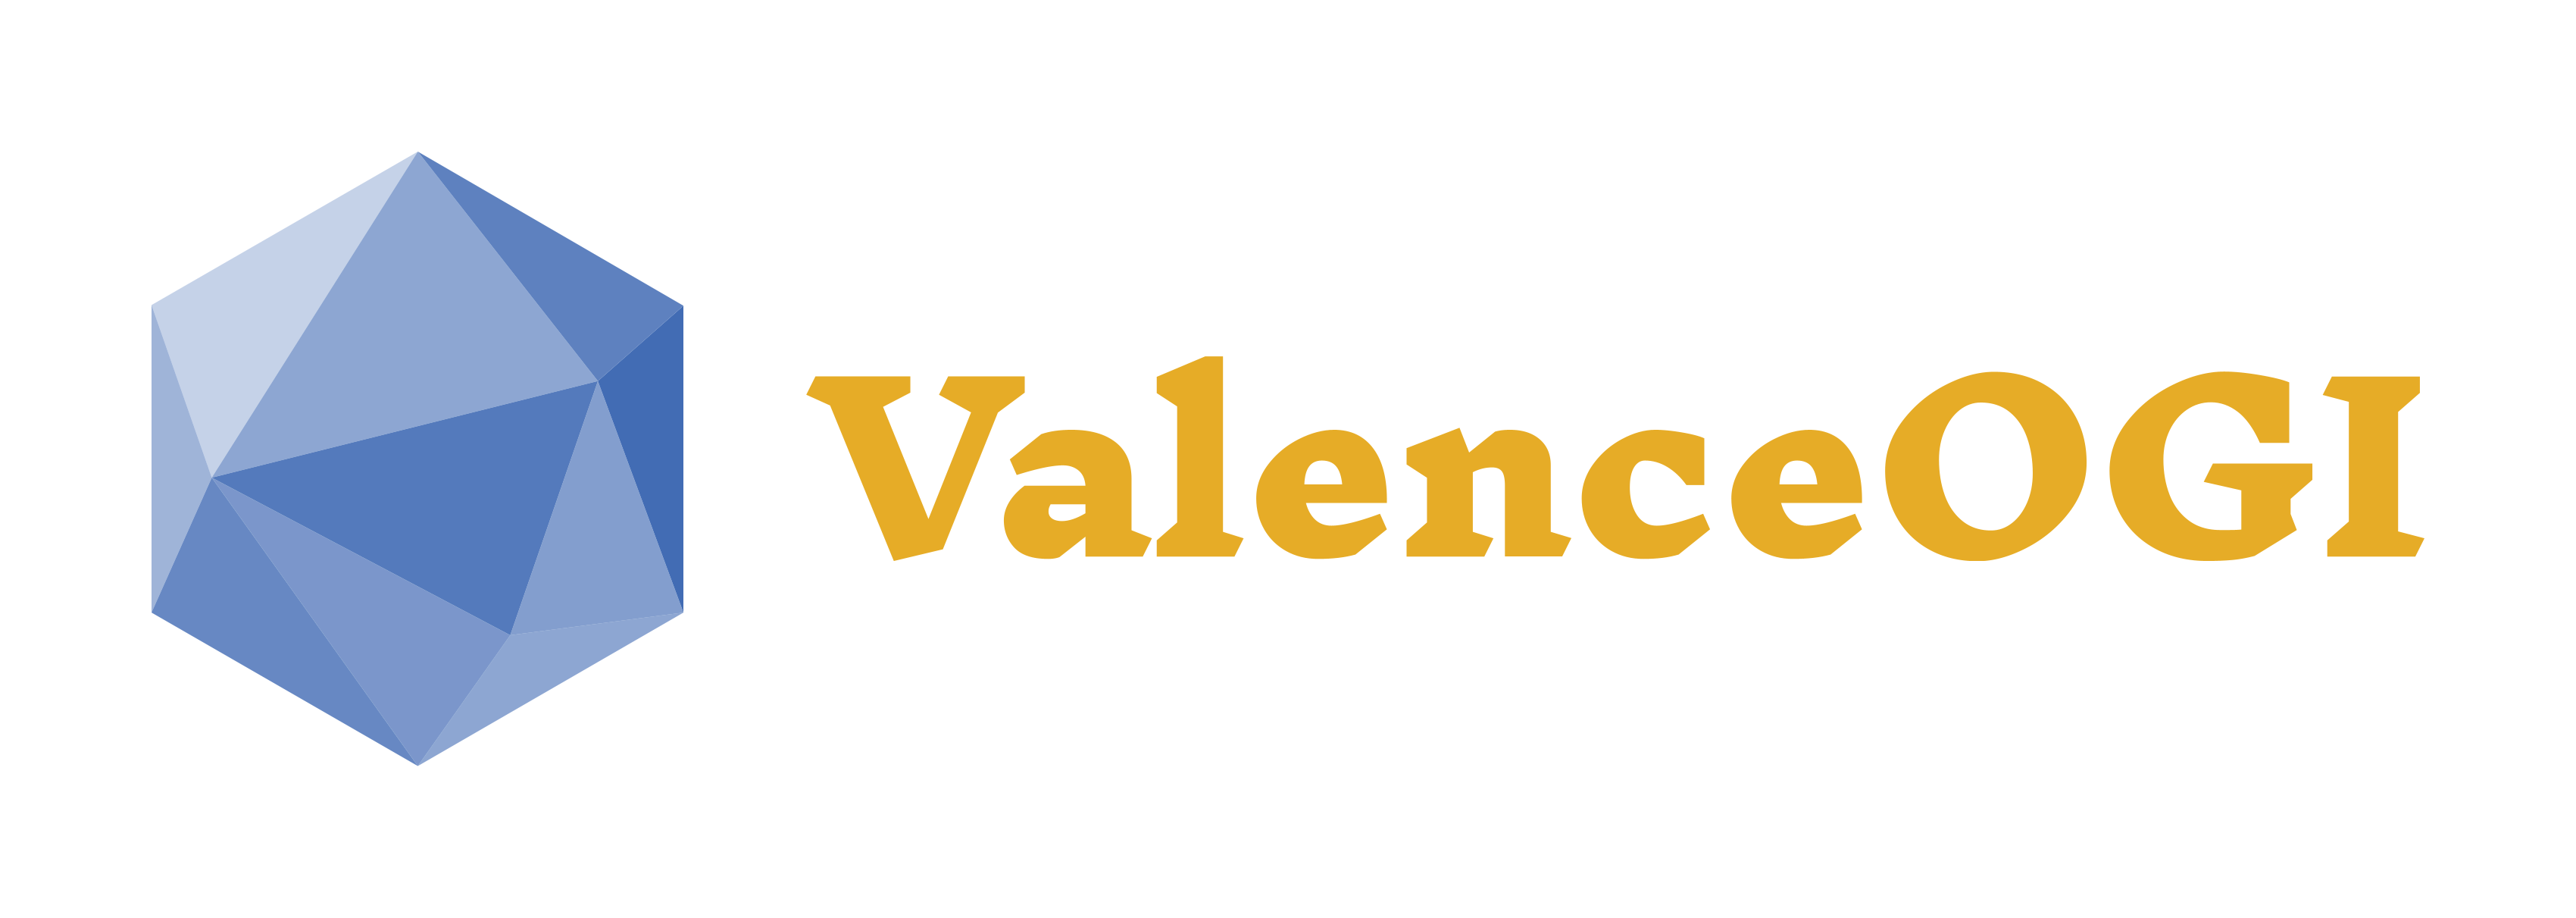 Valenceogi